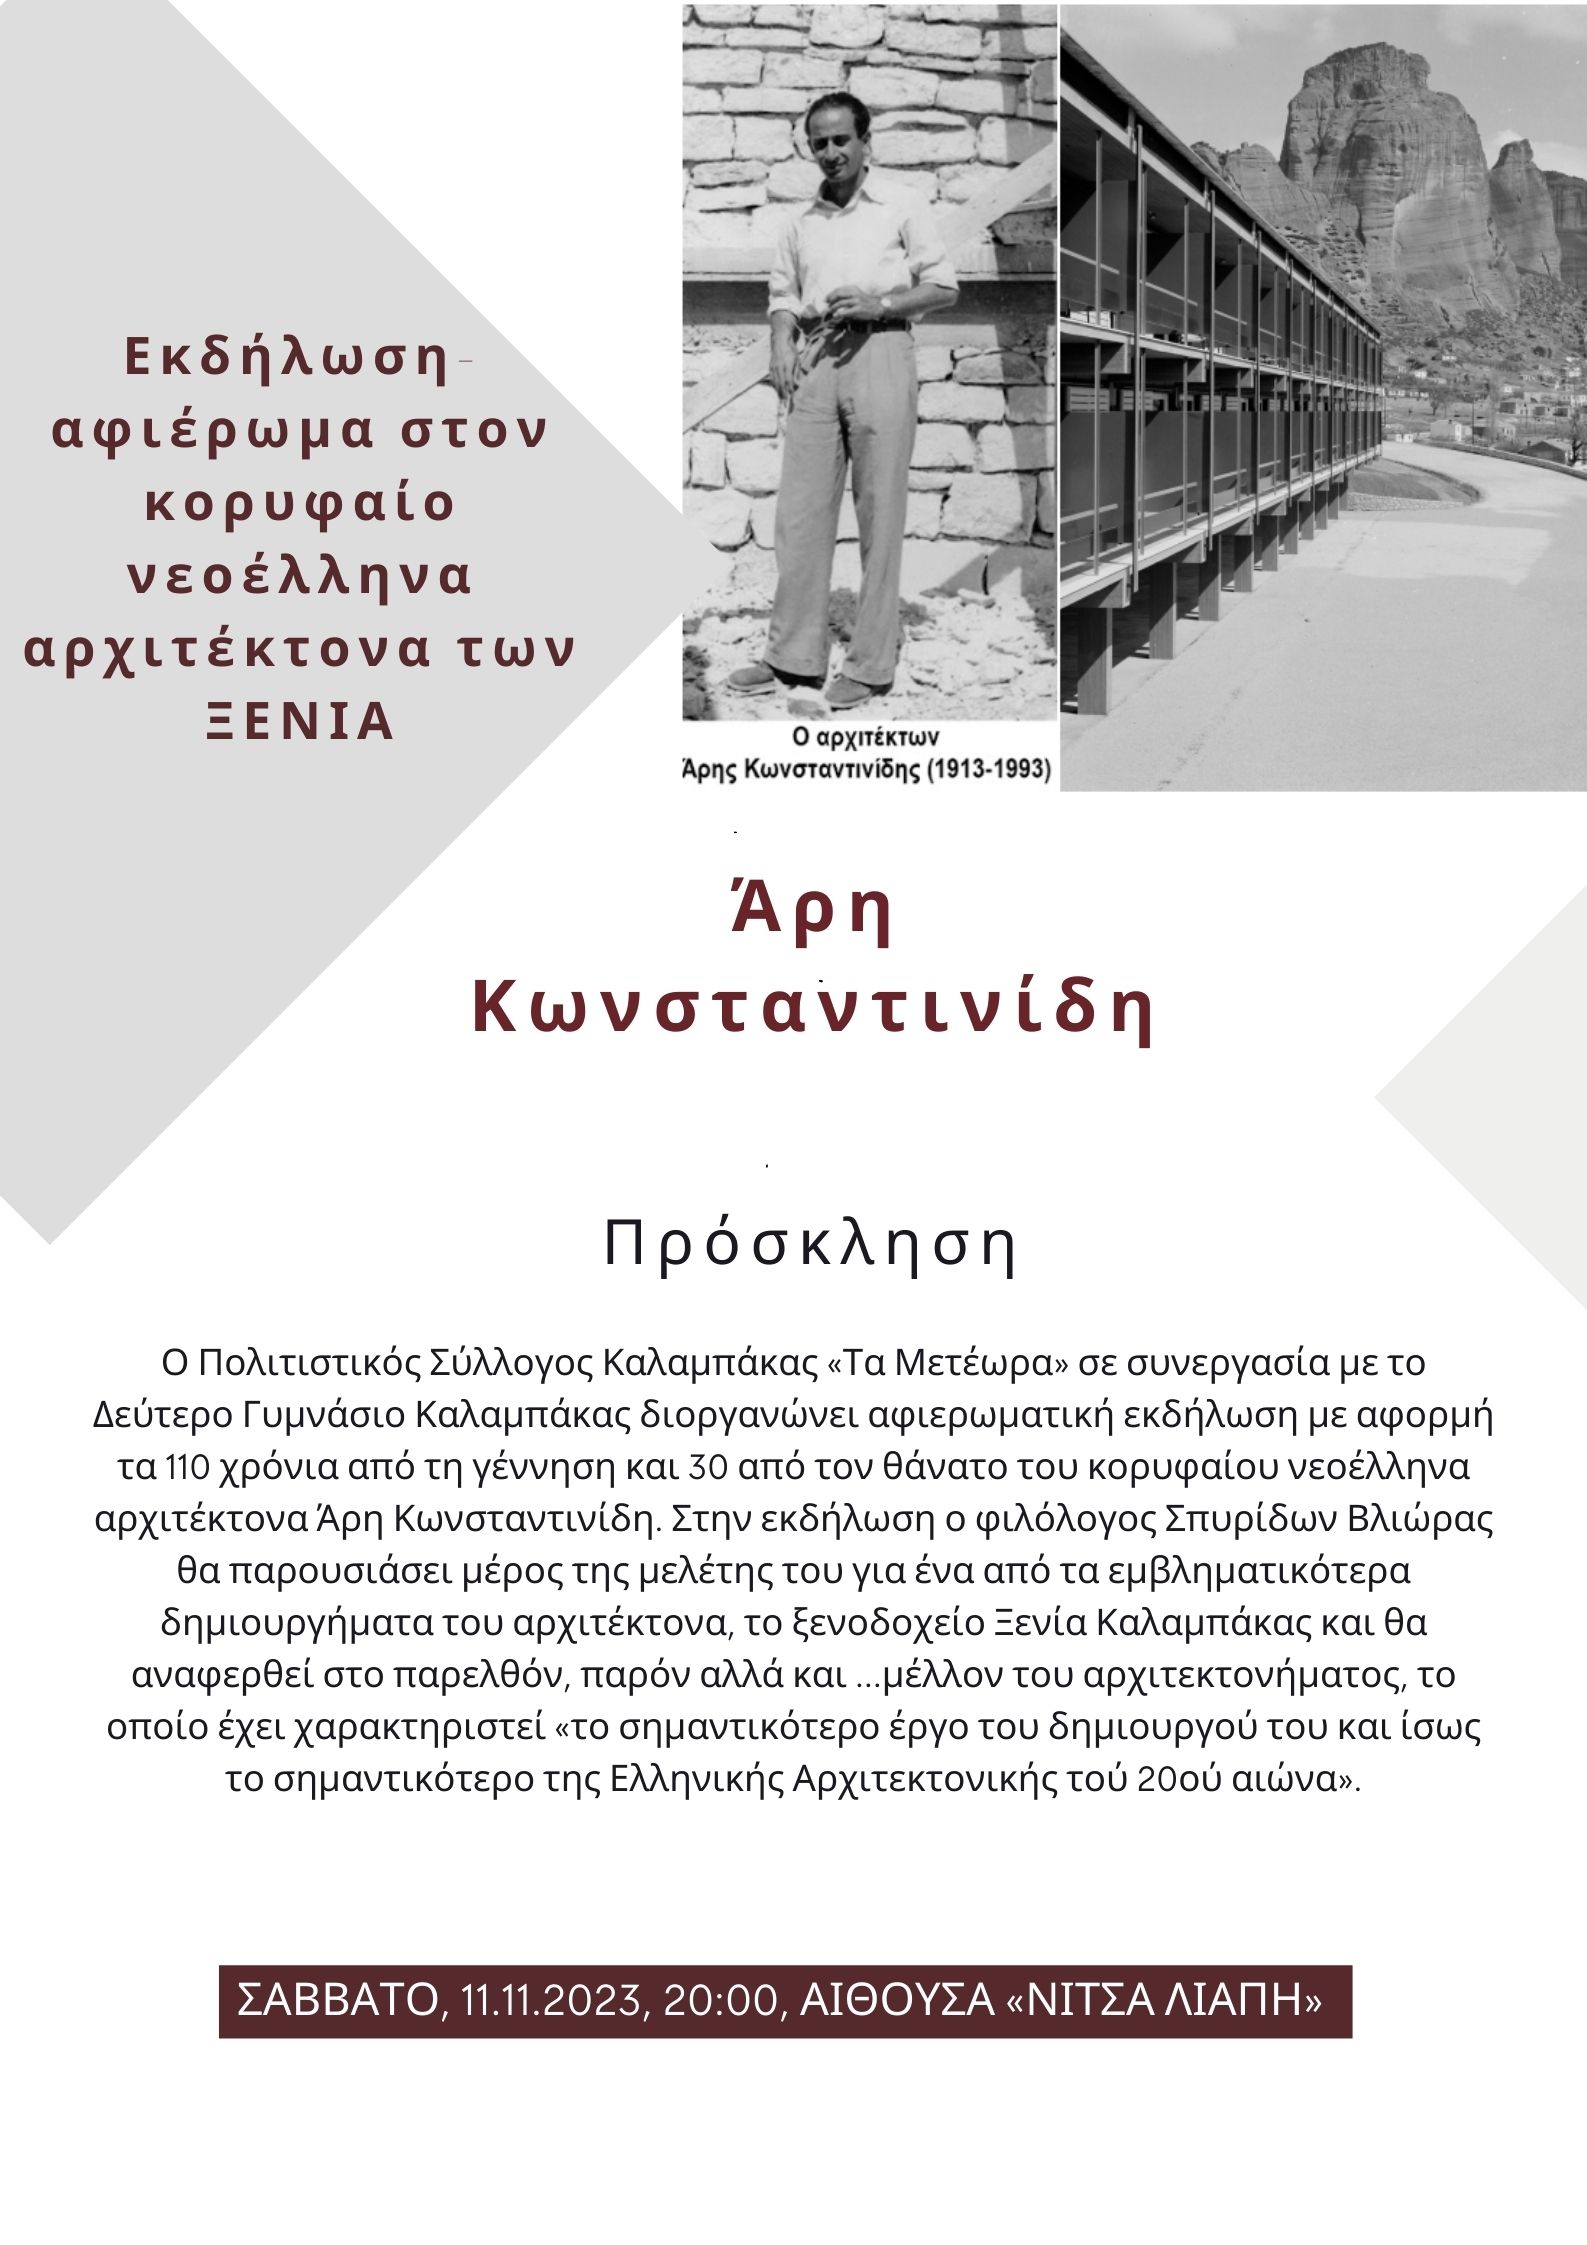 Kαλαμπάκα: Aφιερωματική εκδήλωση στον νεοέλληνα αρχιτέκτονα Άρη Κωνσταντινίδη